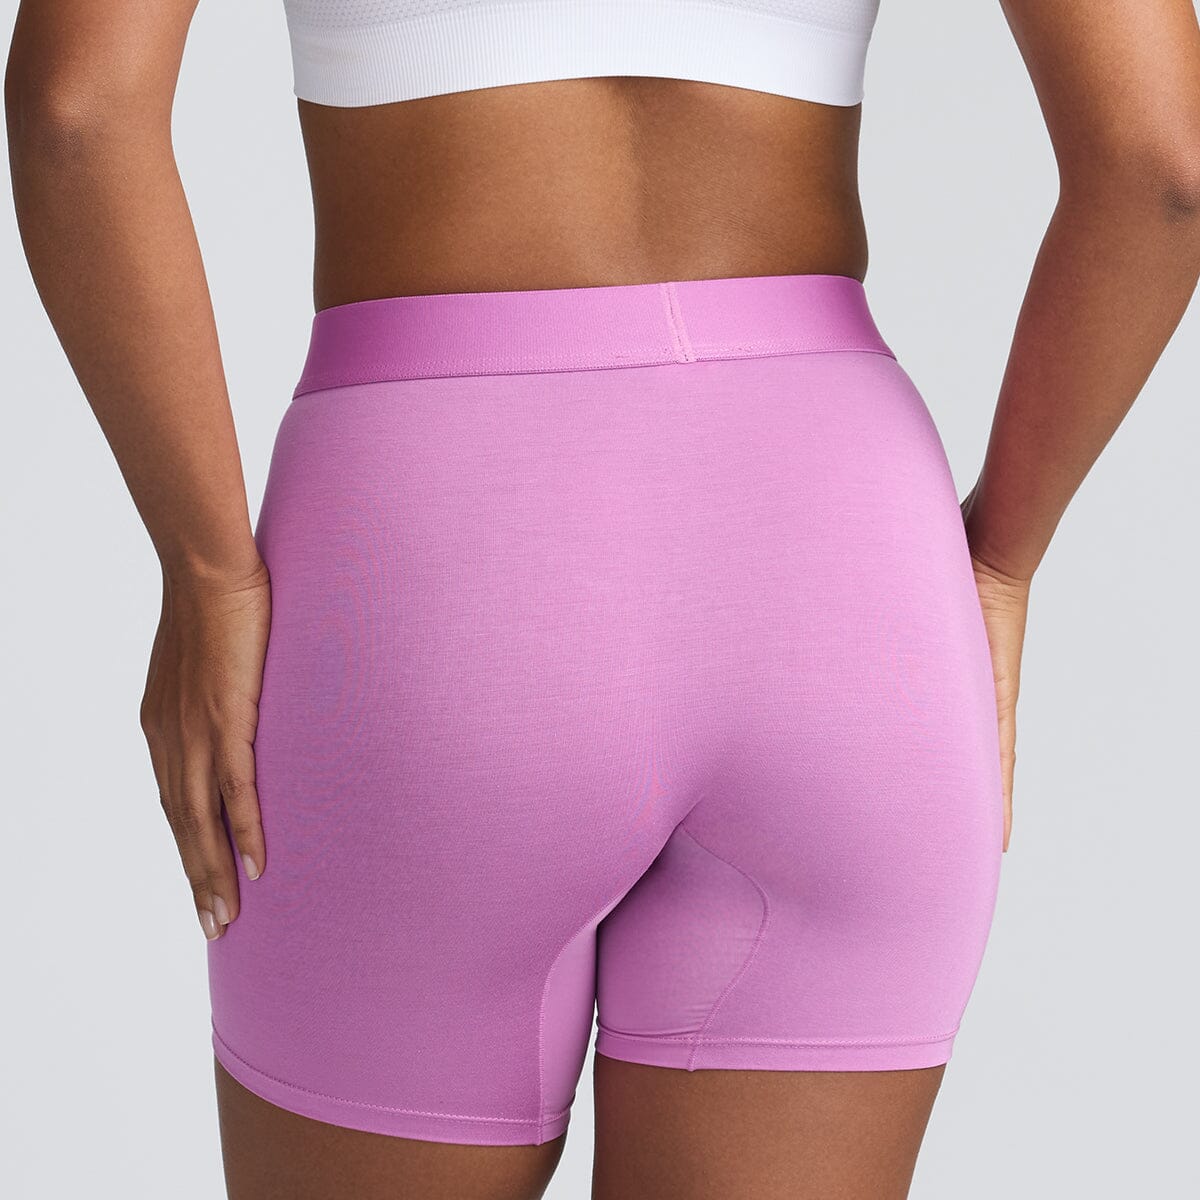 Women's Body Shorts - Prawn Cracker - Bamboo Underwear